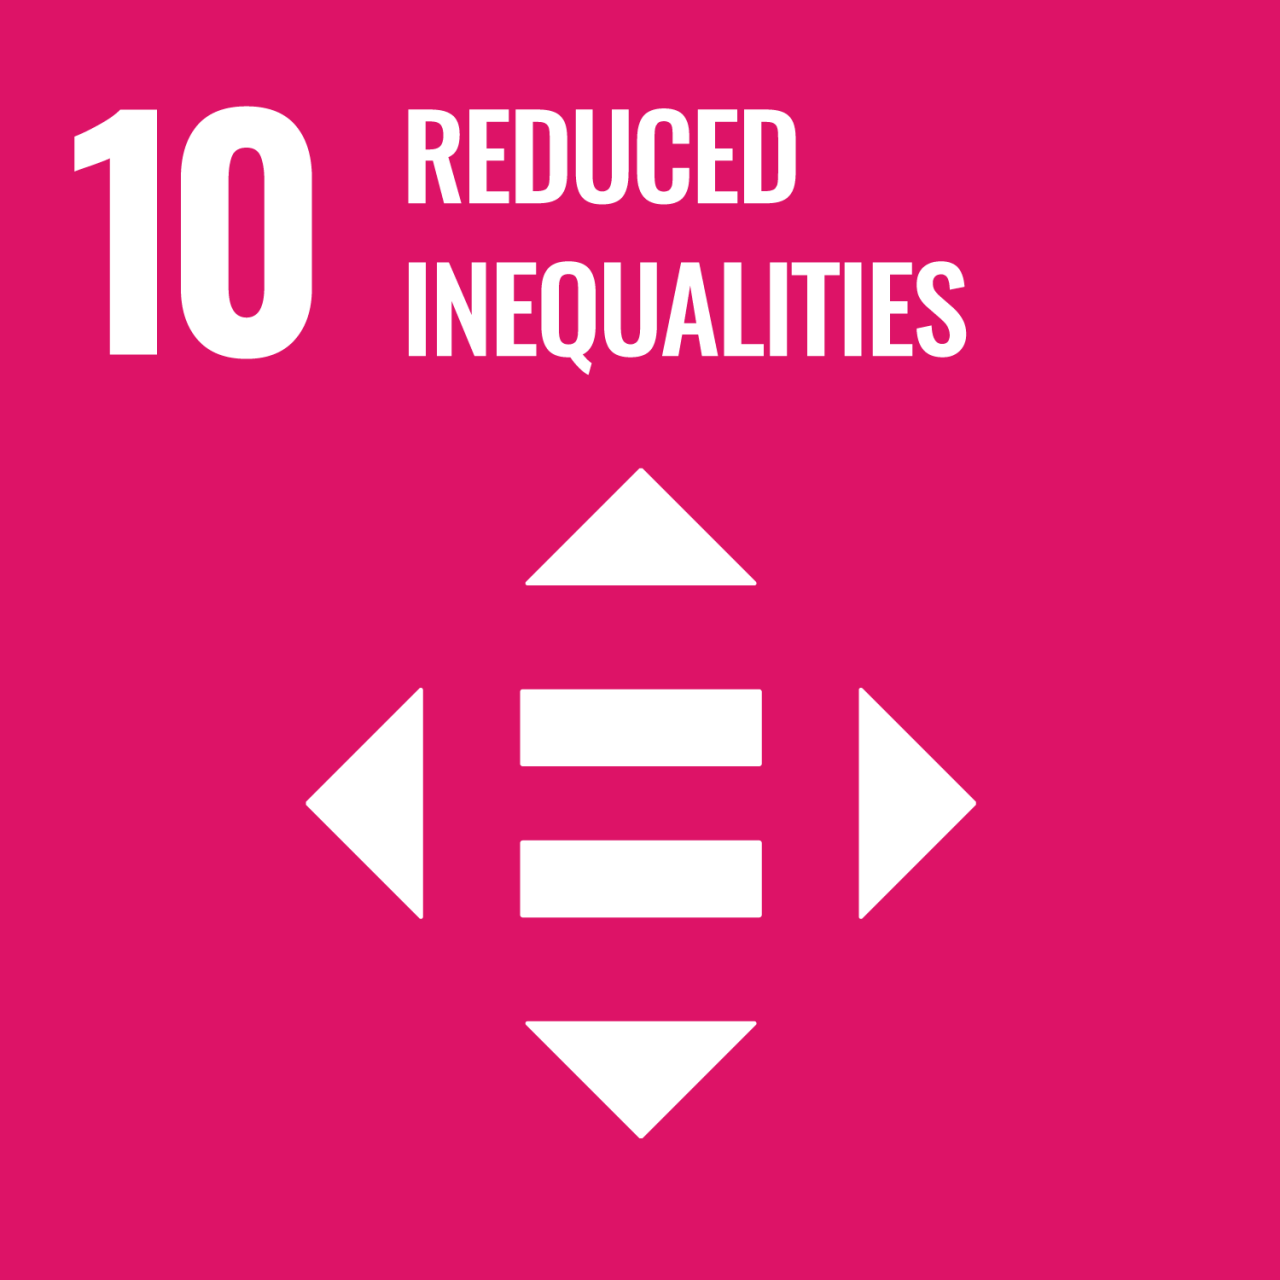 Reducing inequalities